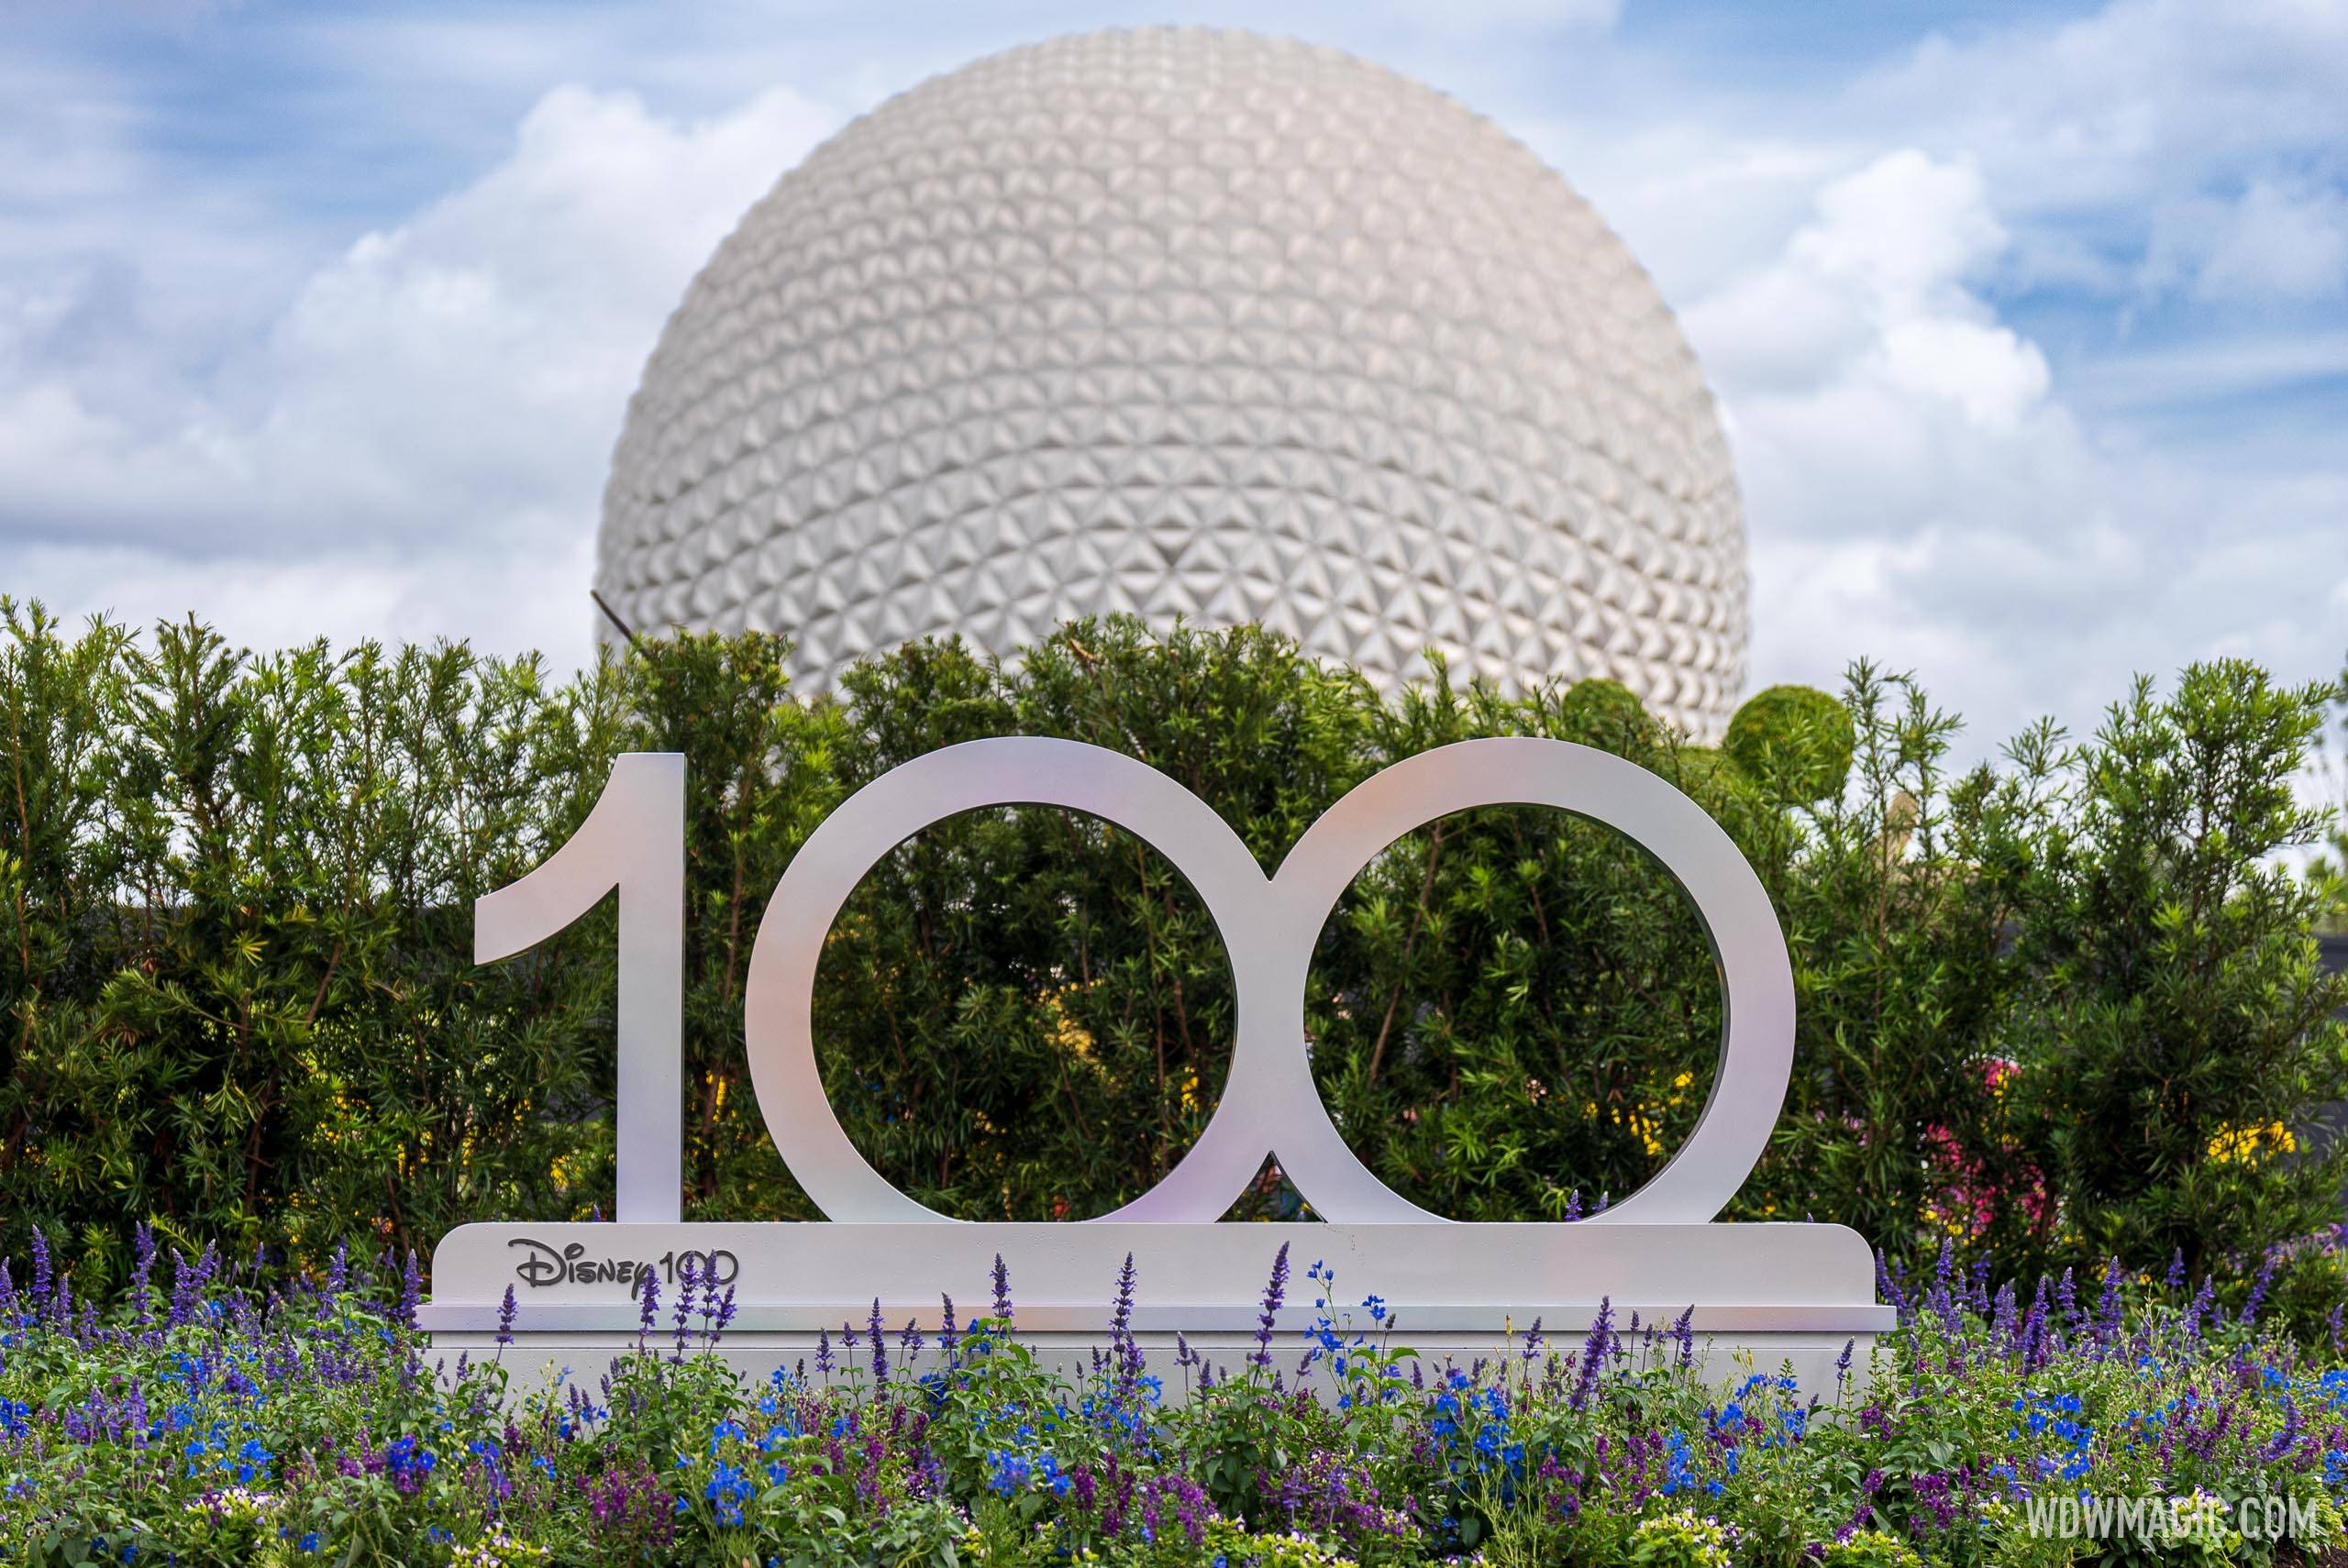 Platinum Disney100 photo op arrives at EPCOT